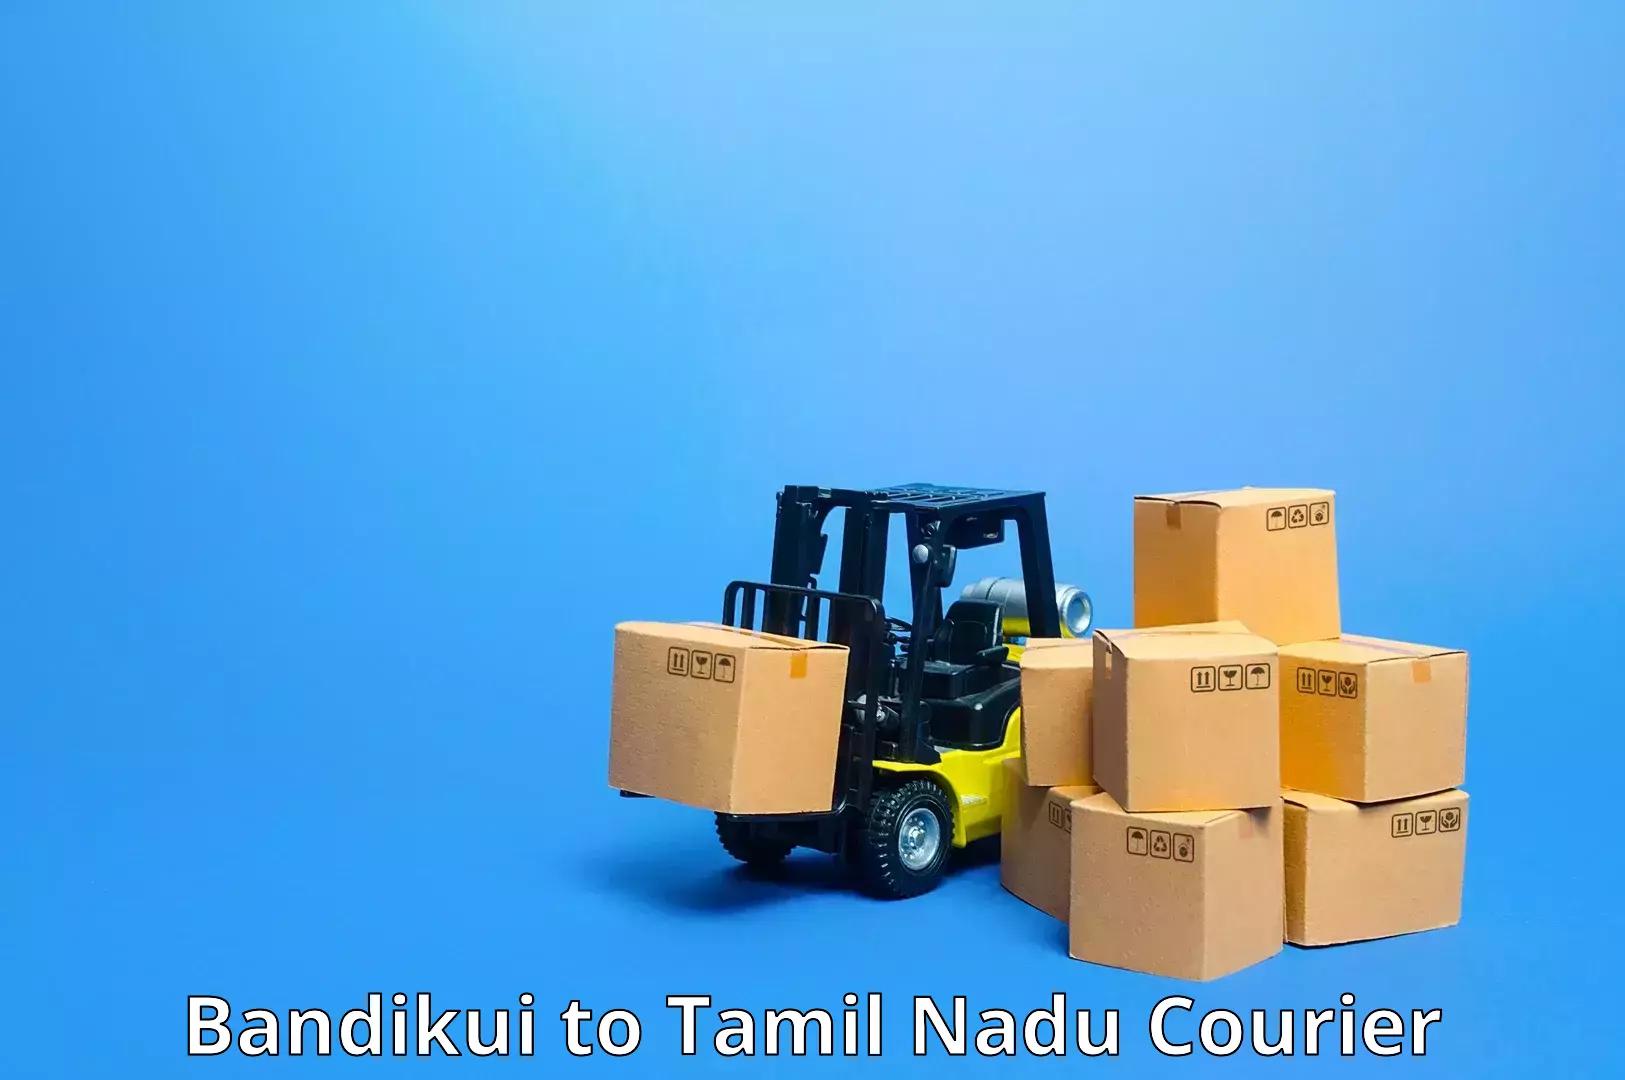 Versatile courier offerings Bandikui to The Gandhigram Rural Institute